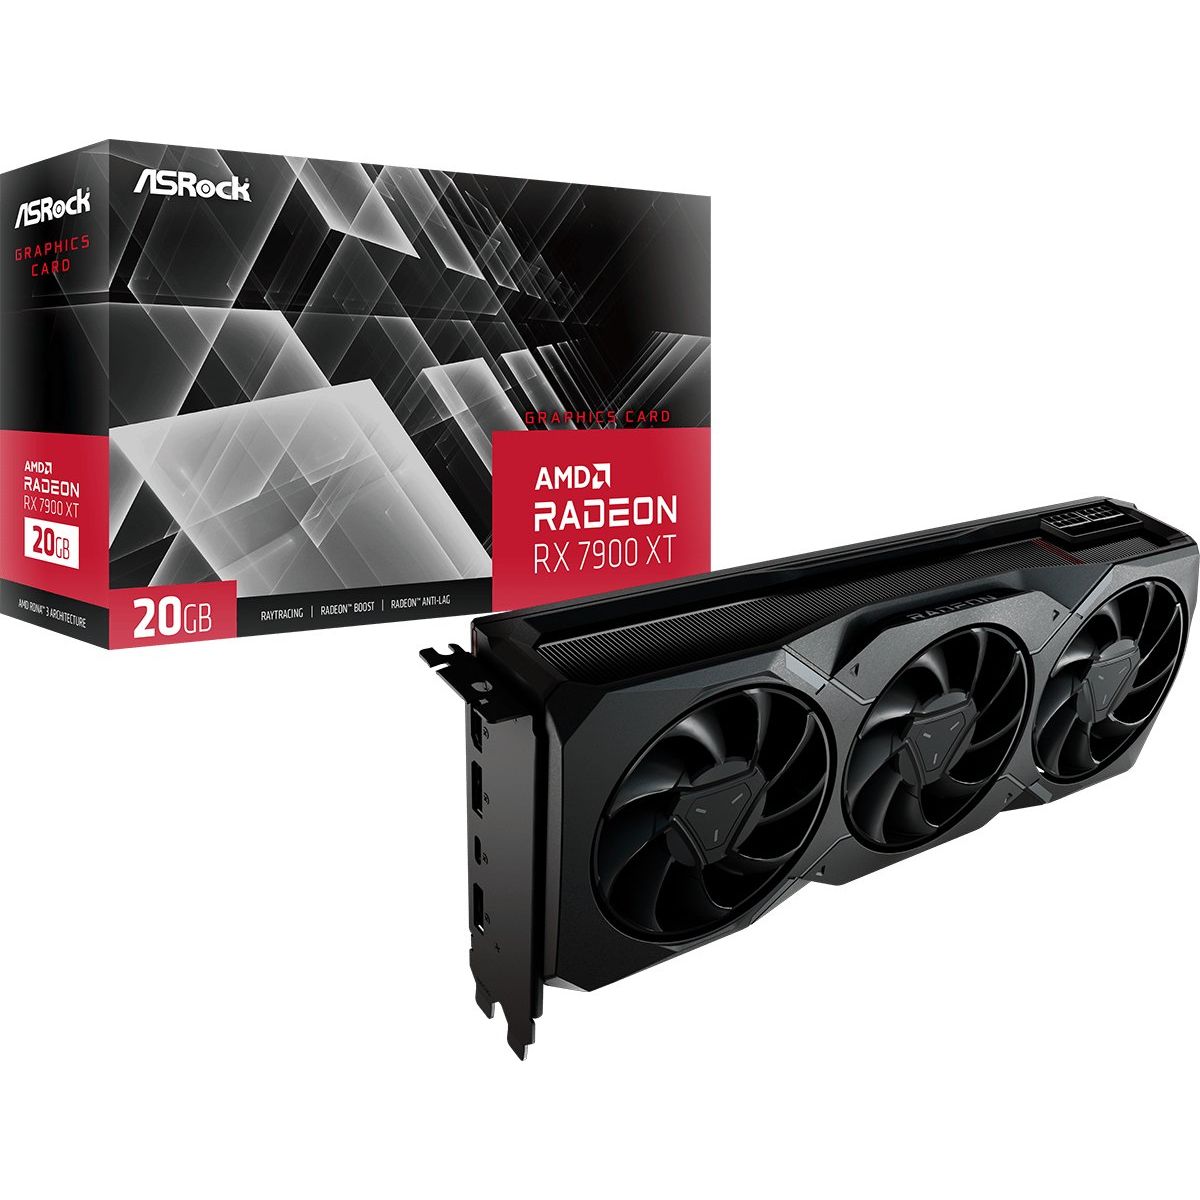 ASRock Radeon RX 7900 XT 20GB GDDR6 GPU - Video Cards & Adapters - Gamertech.shop